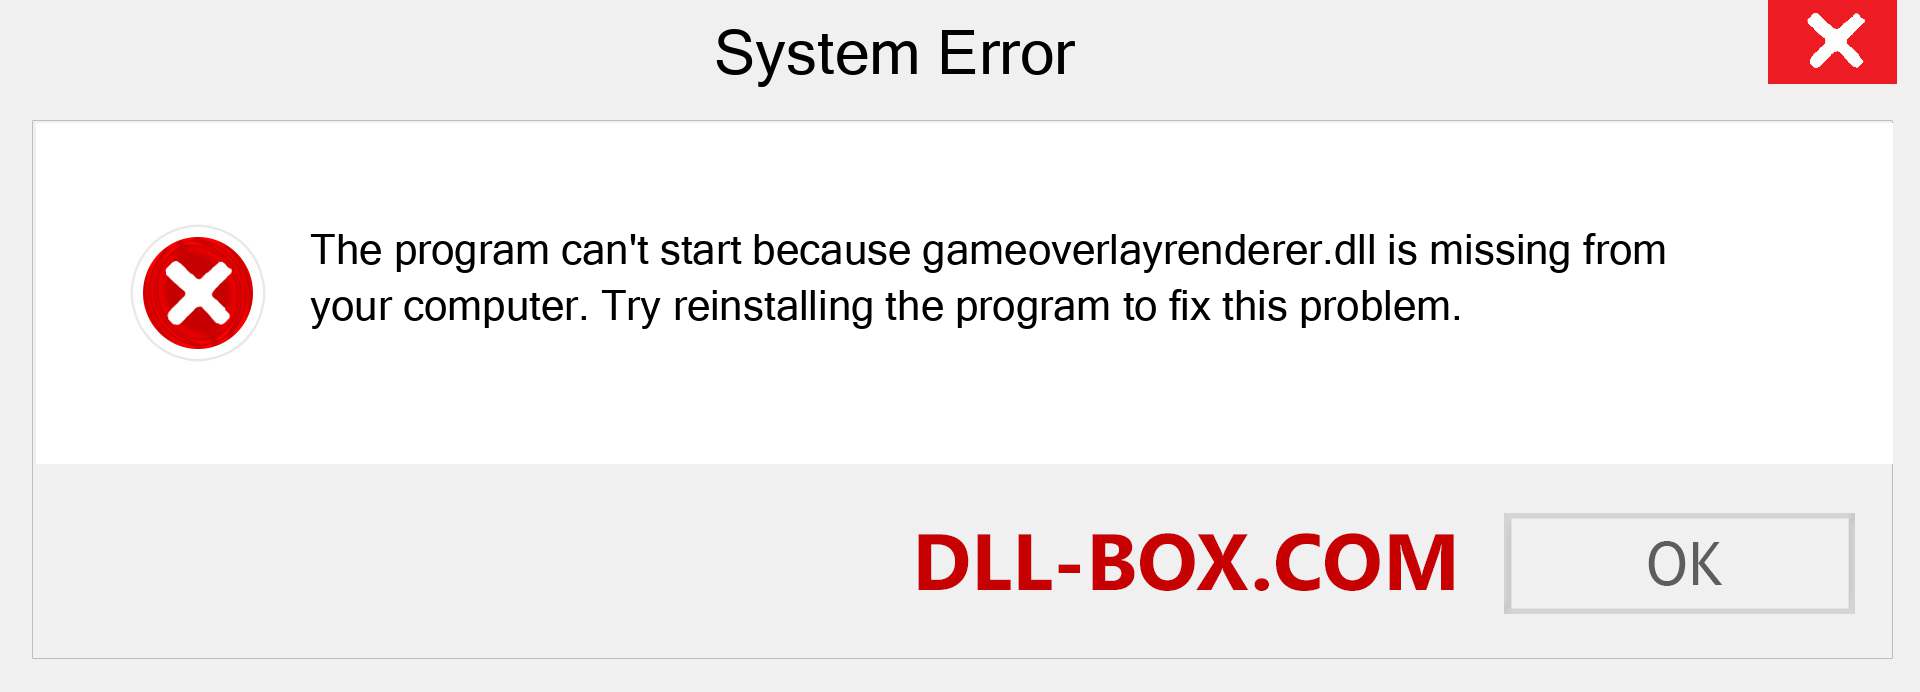  gameoverlayrenderer.dll file is missing?. Download for Windows 7, 8, 10 - Fix  gameoverlayrenderer dll Missing Error on Windows, photos, images